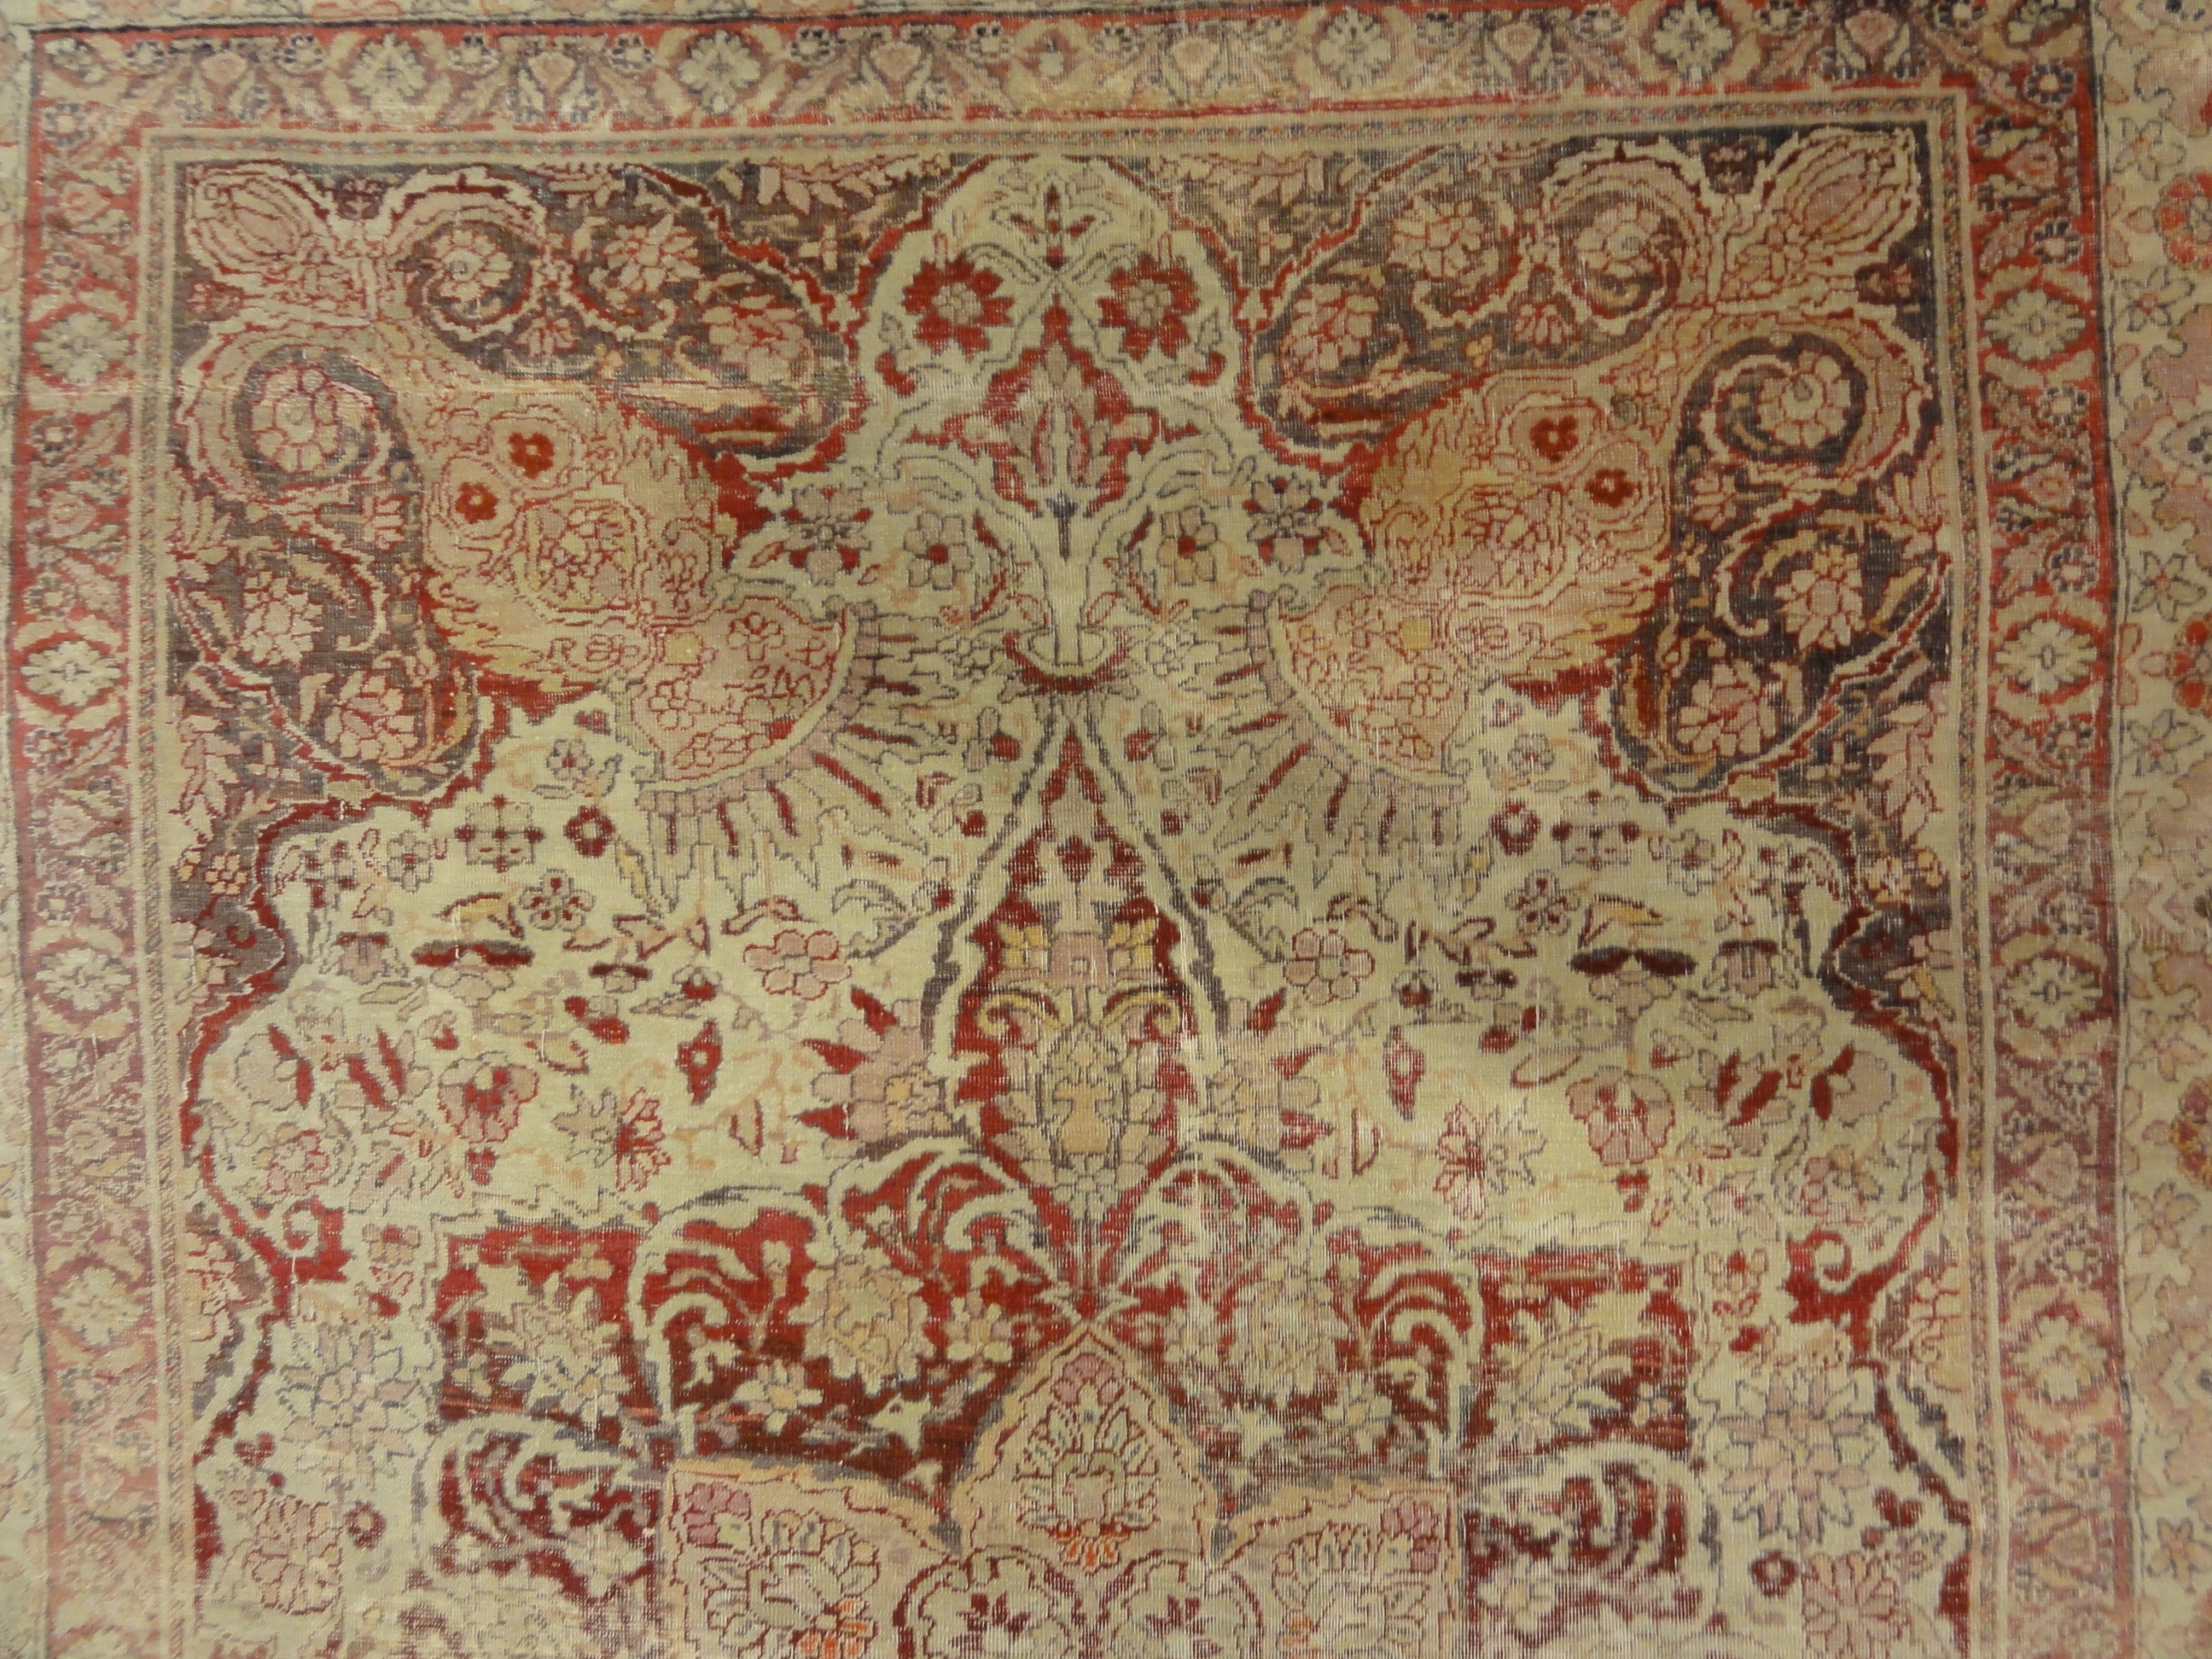 Rare Unique Kerman Area Rug Persian Genuine Woven Carpet Art Authentic Intricate Santa Barbara Design Center Rugs and More